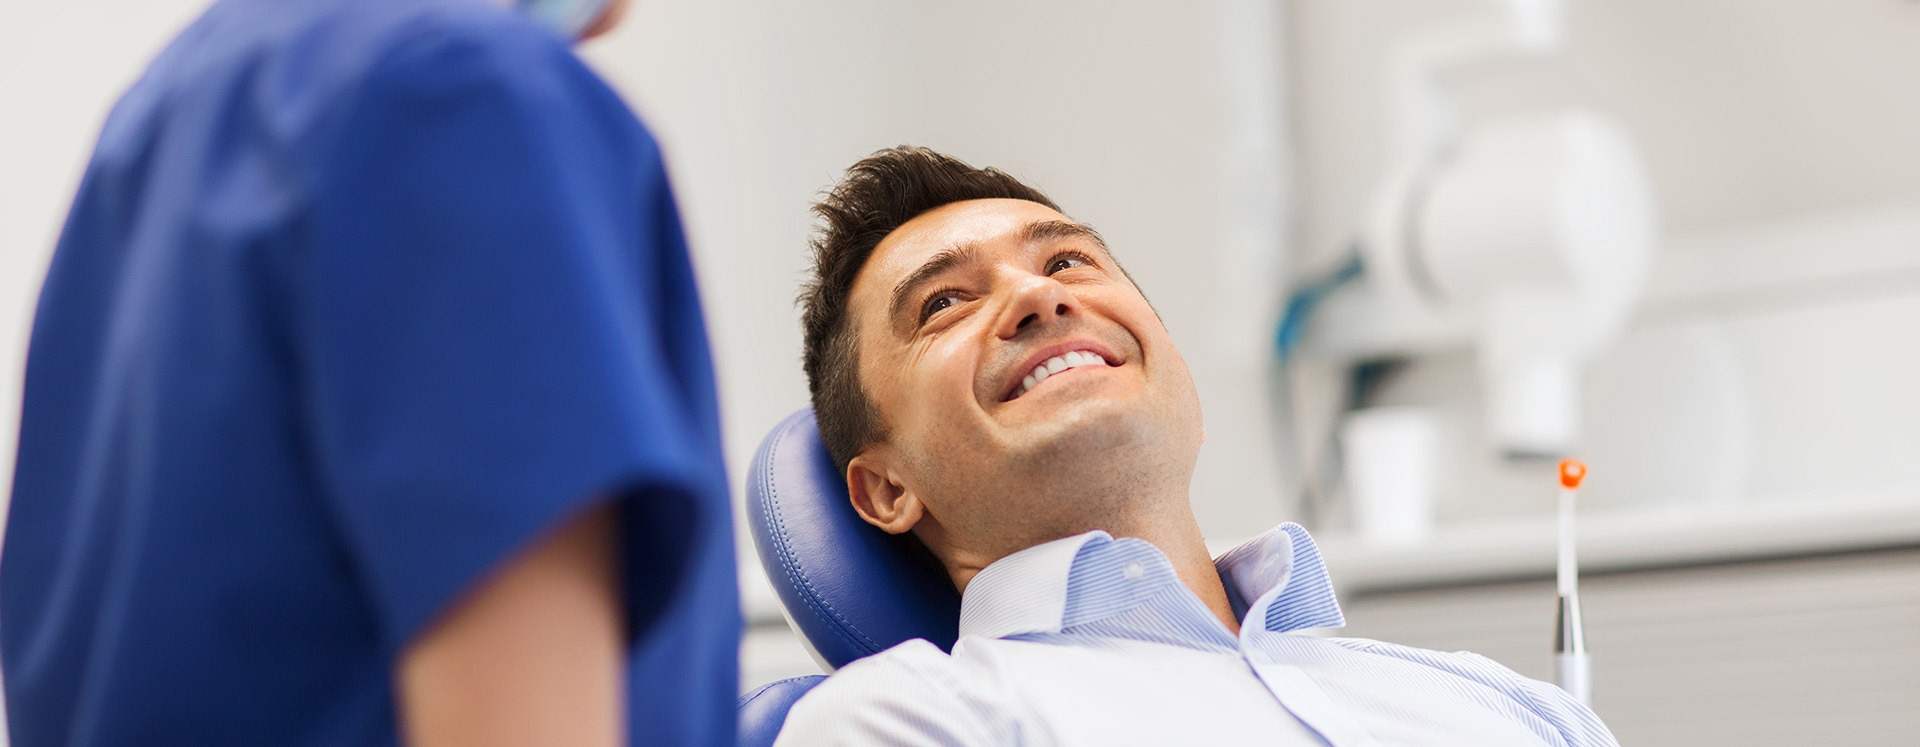 NE Calgary Happy Hygiene Patient | Redstone Smiles Dental | General and Family Dentist | NE Calgary Dentist